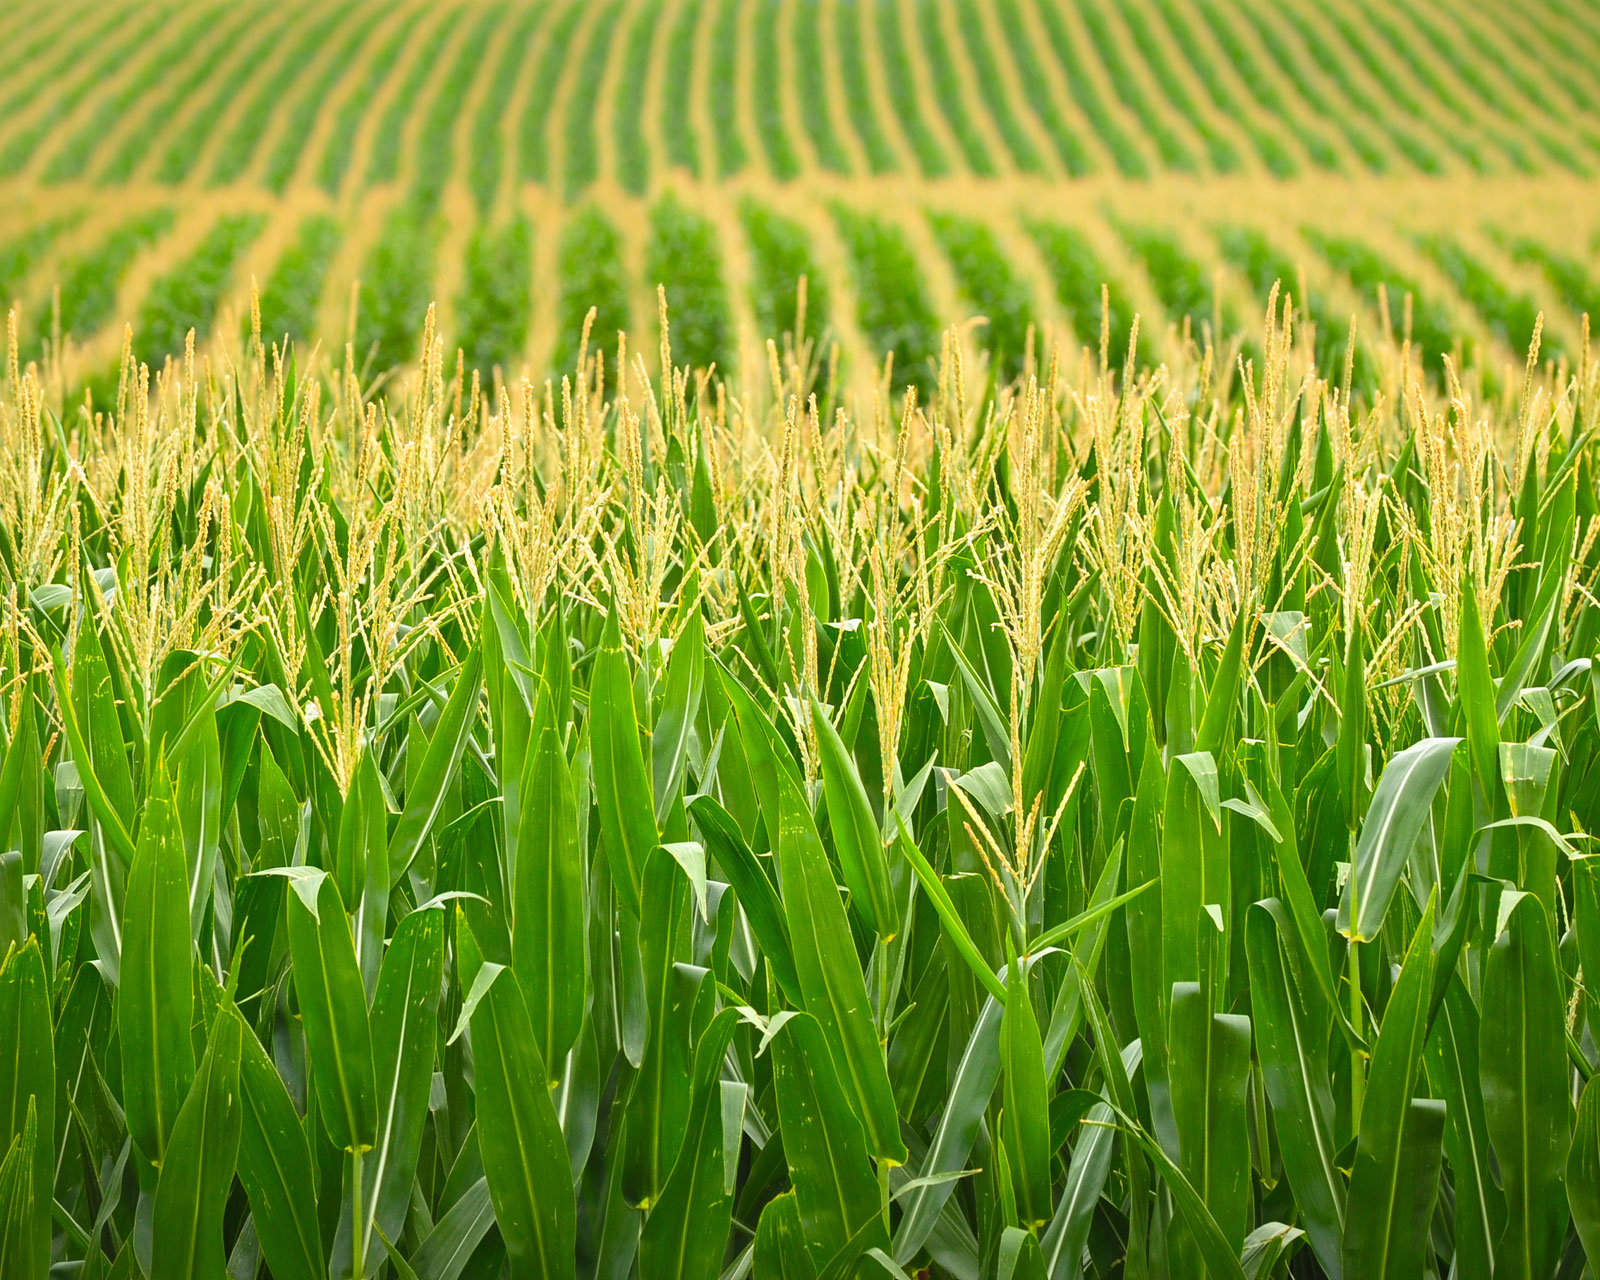 Oklahoma Farm Report Latest USDA Crop Progress Report Shows Few